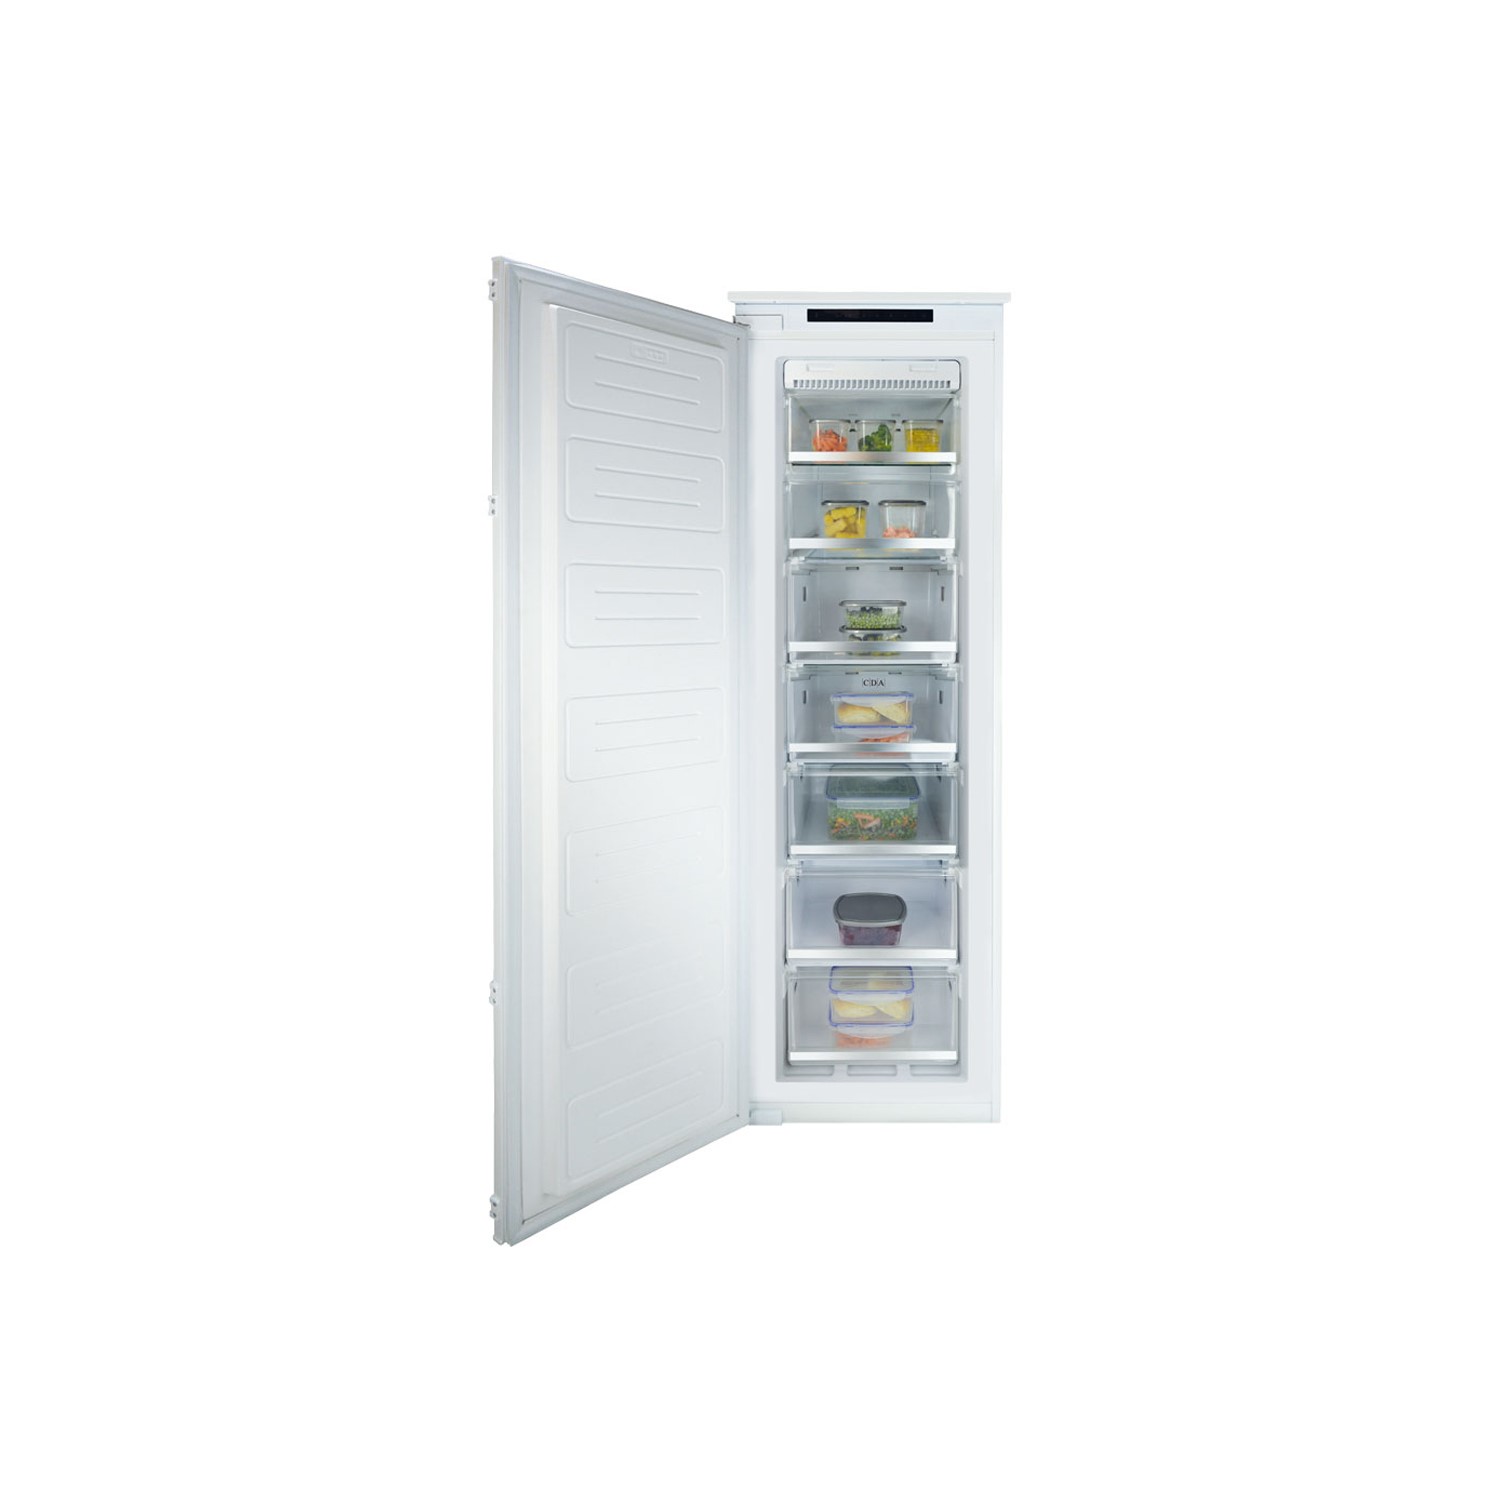 Refurbished CDA Integrated 200 Litre Freezer